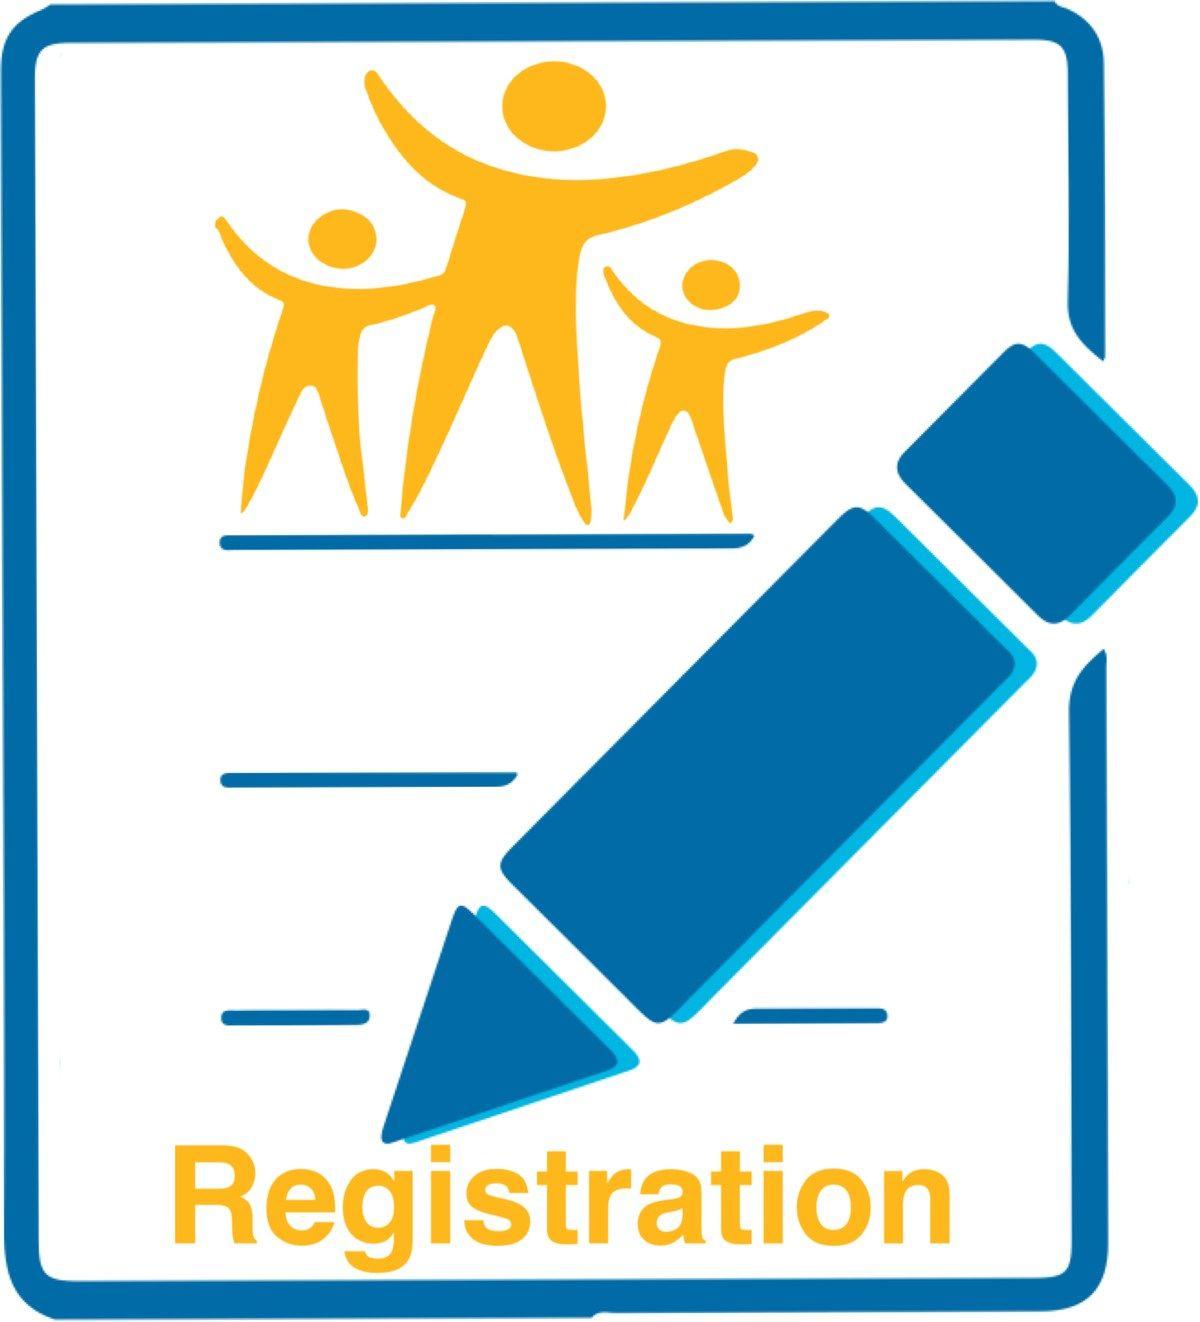 Registration Logo - Registration Information Central Lake School